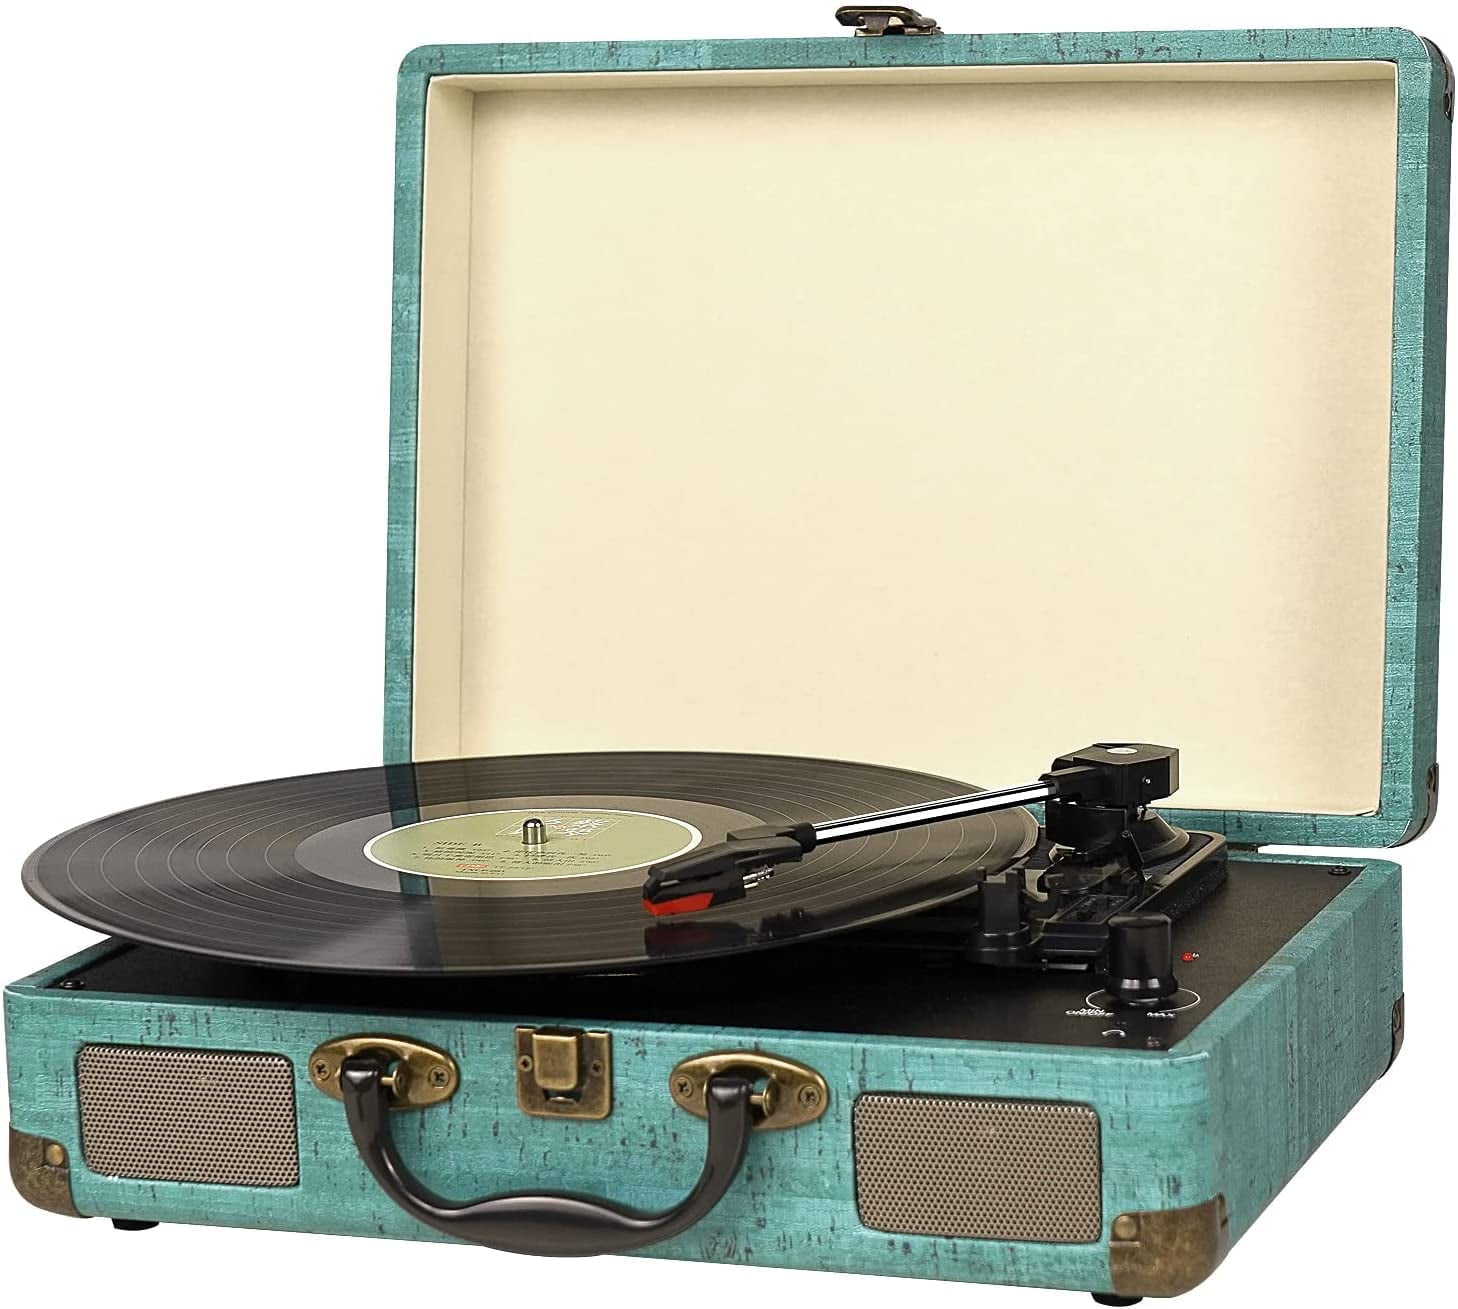 McDonalds RECORD?! #recordplayer #recordplayers #turntable #turntables  #vintage #vinyl #vinyleyezz #vinyls #records #nostalgia #retro